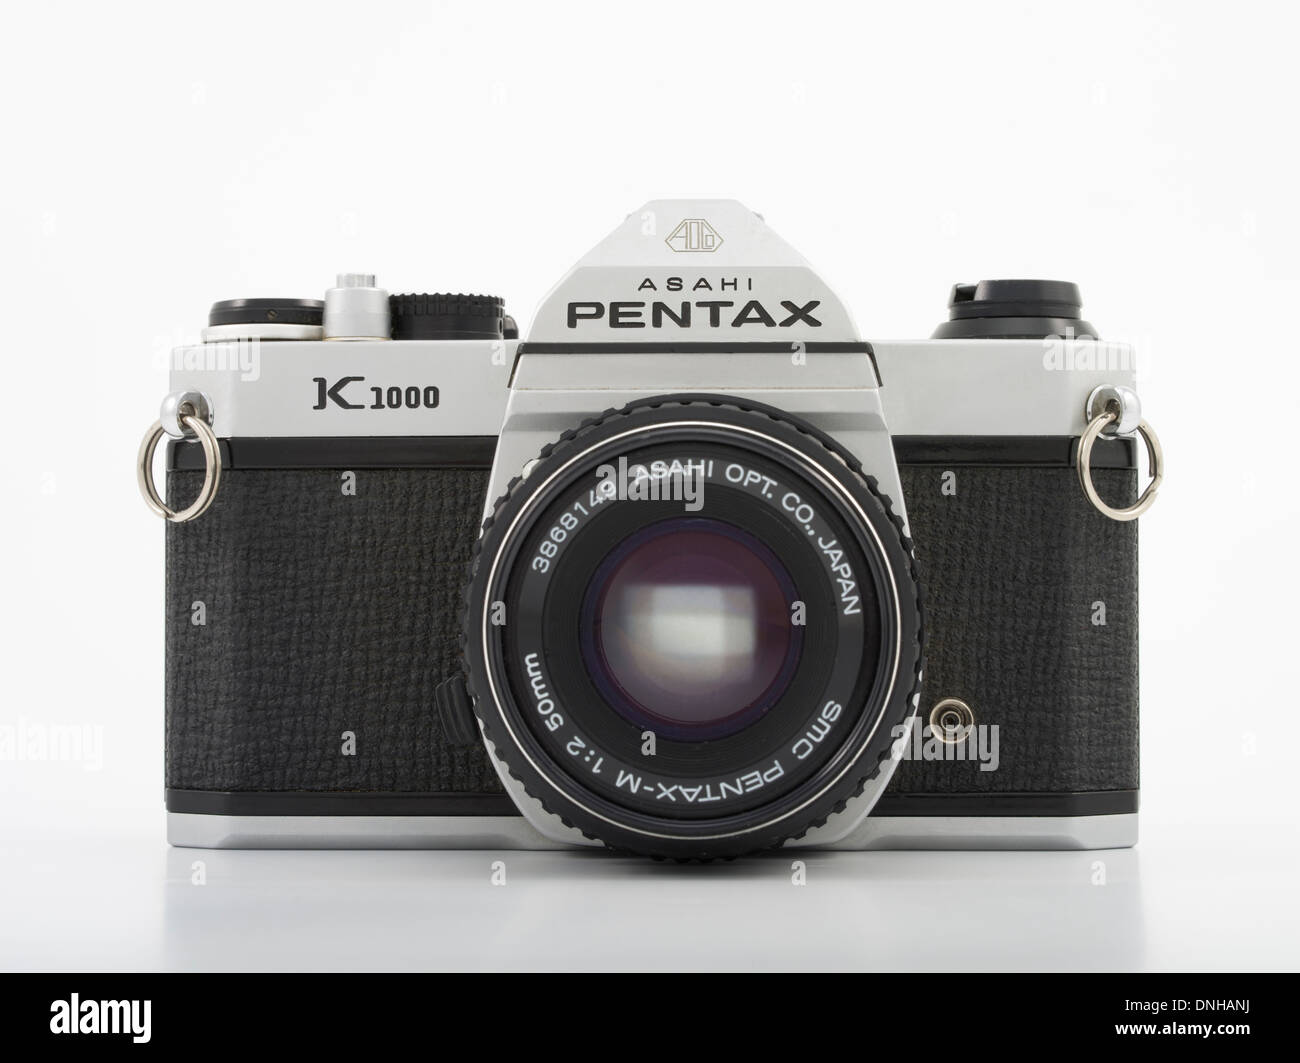 Asahi Pentax K1000 35mm SLR fotocamera a pellicola. 1976 Made in Japan Asahi Optical Co., Ltd. Foto Stock